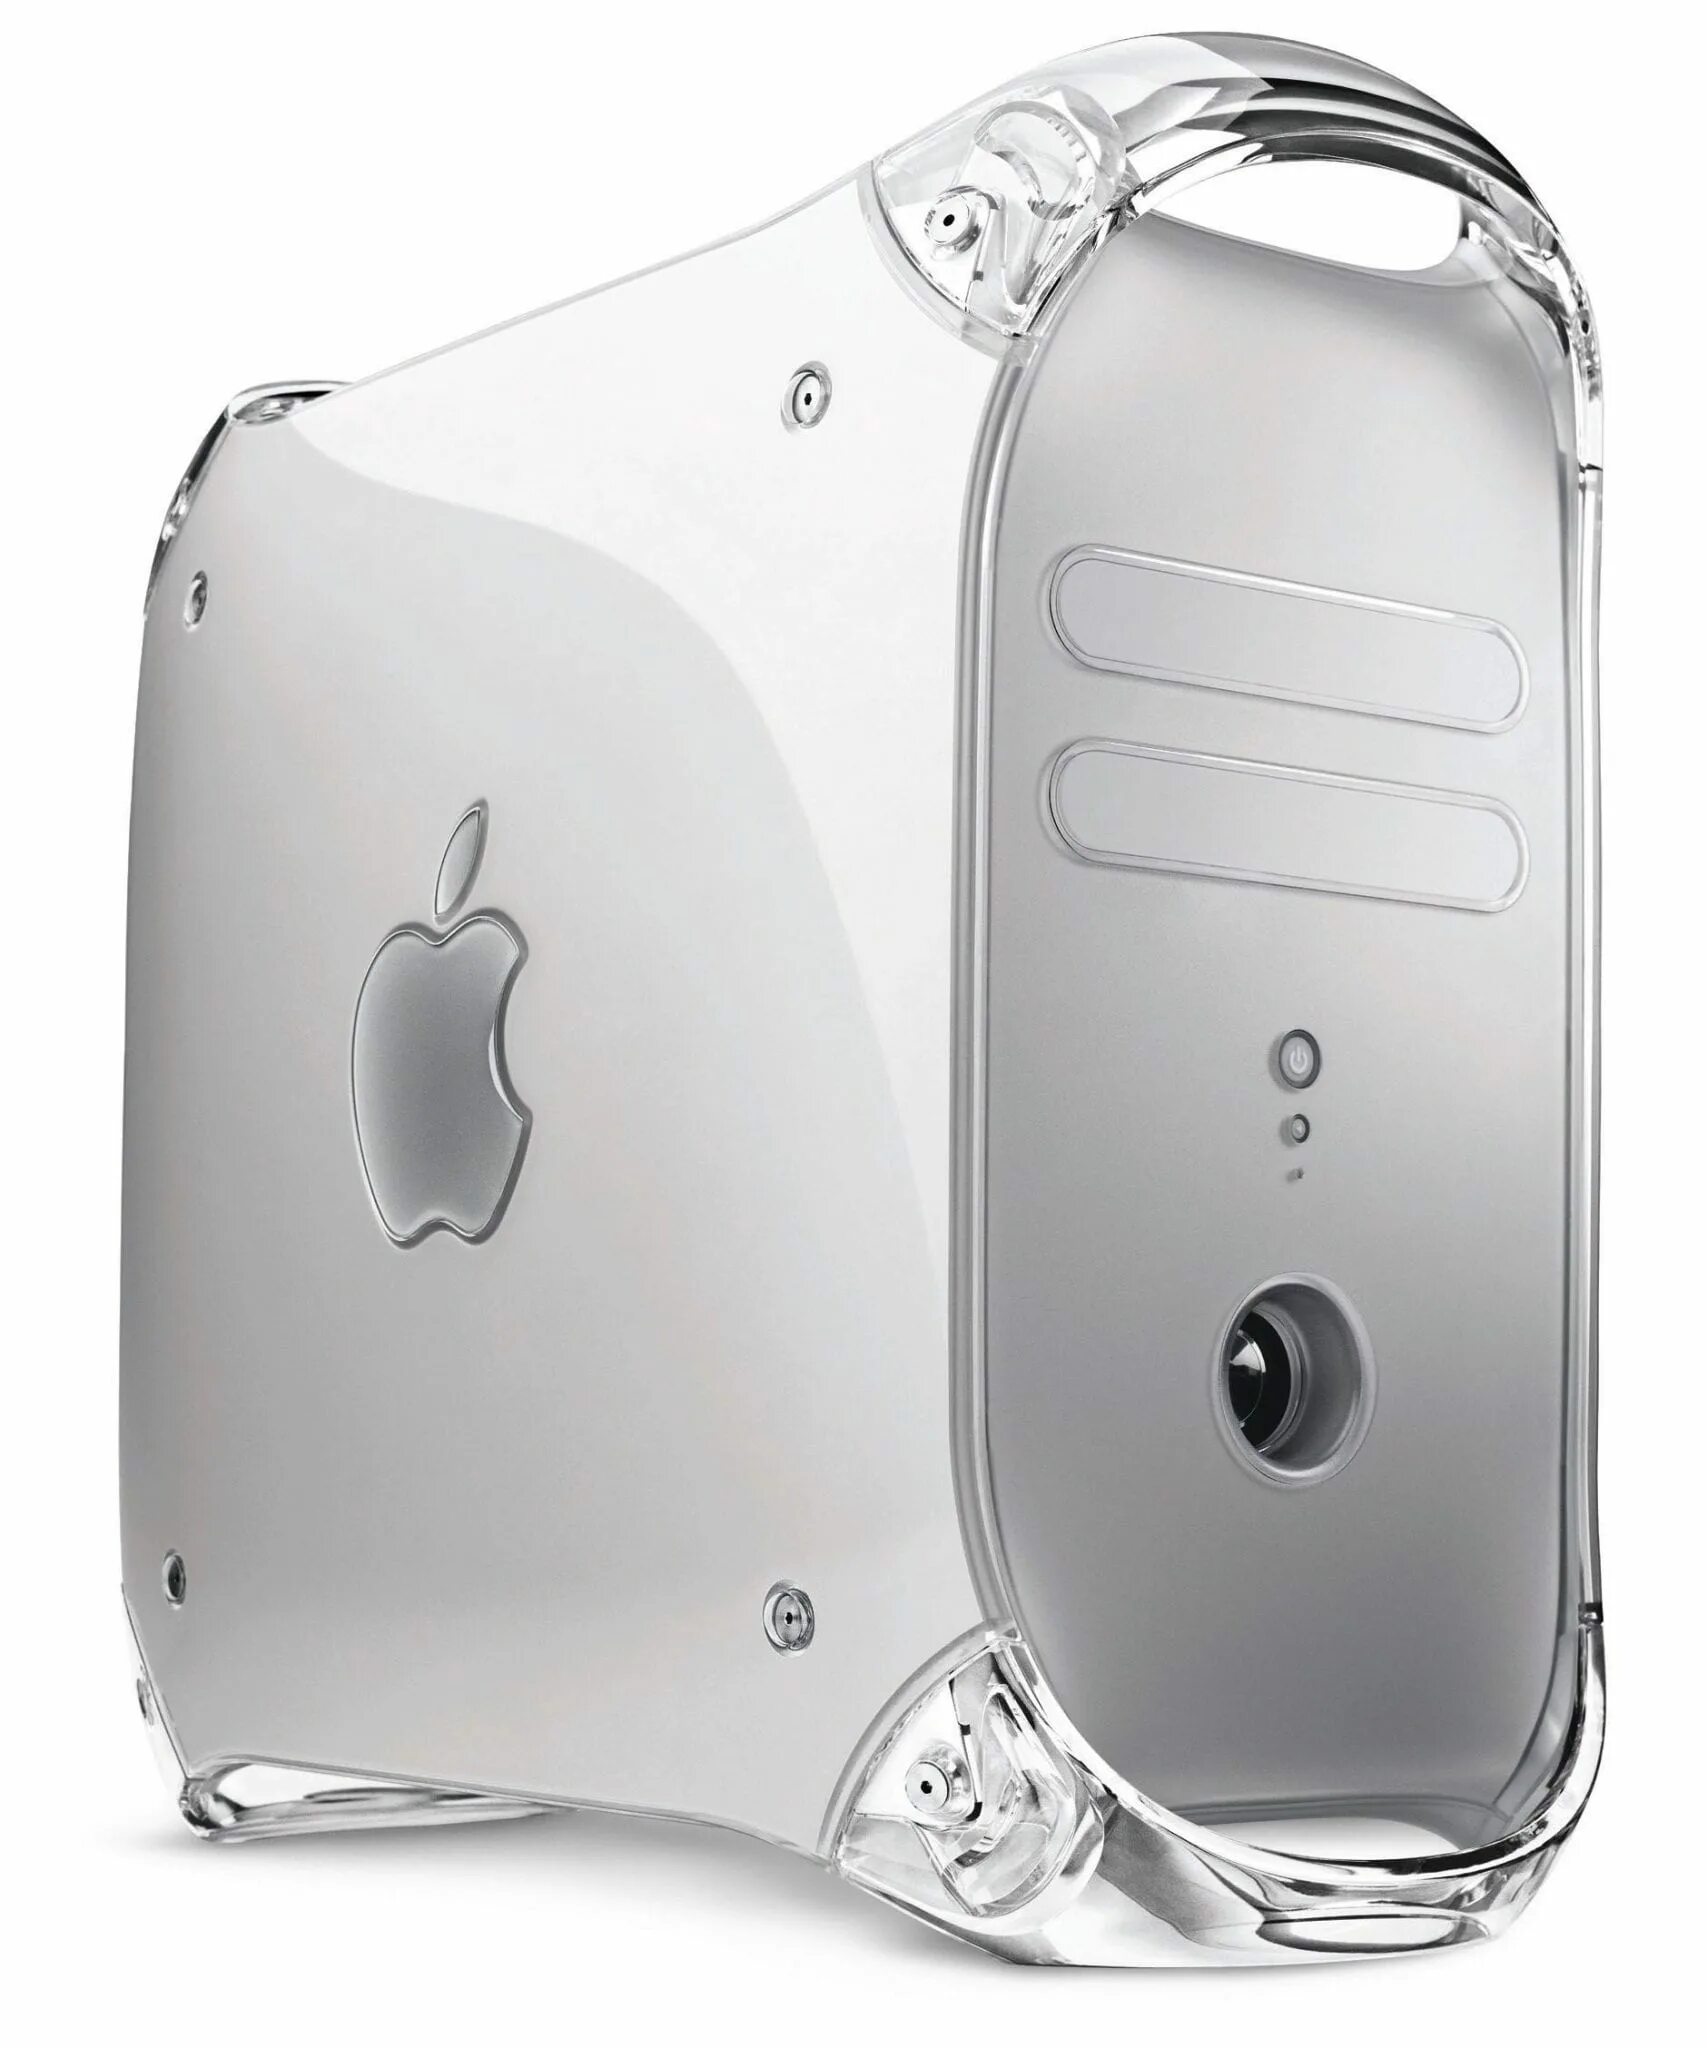 Повер apple. Power Mac g4 2000. Power Mac g4 Quicksilver. Power Mac g4 Cube. Apple POWERMAC g4 корпус.